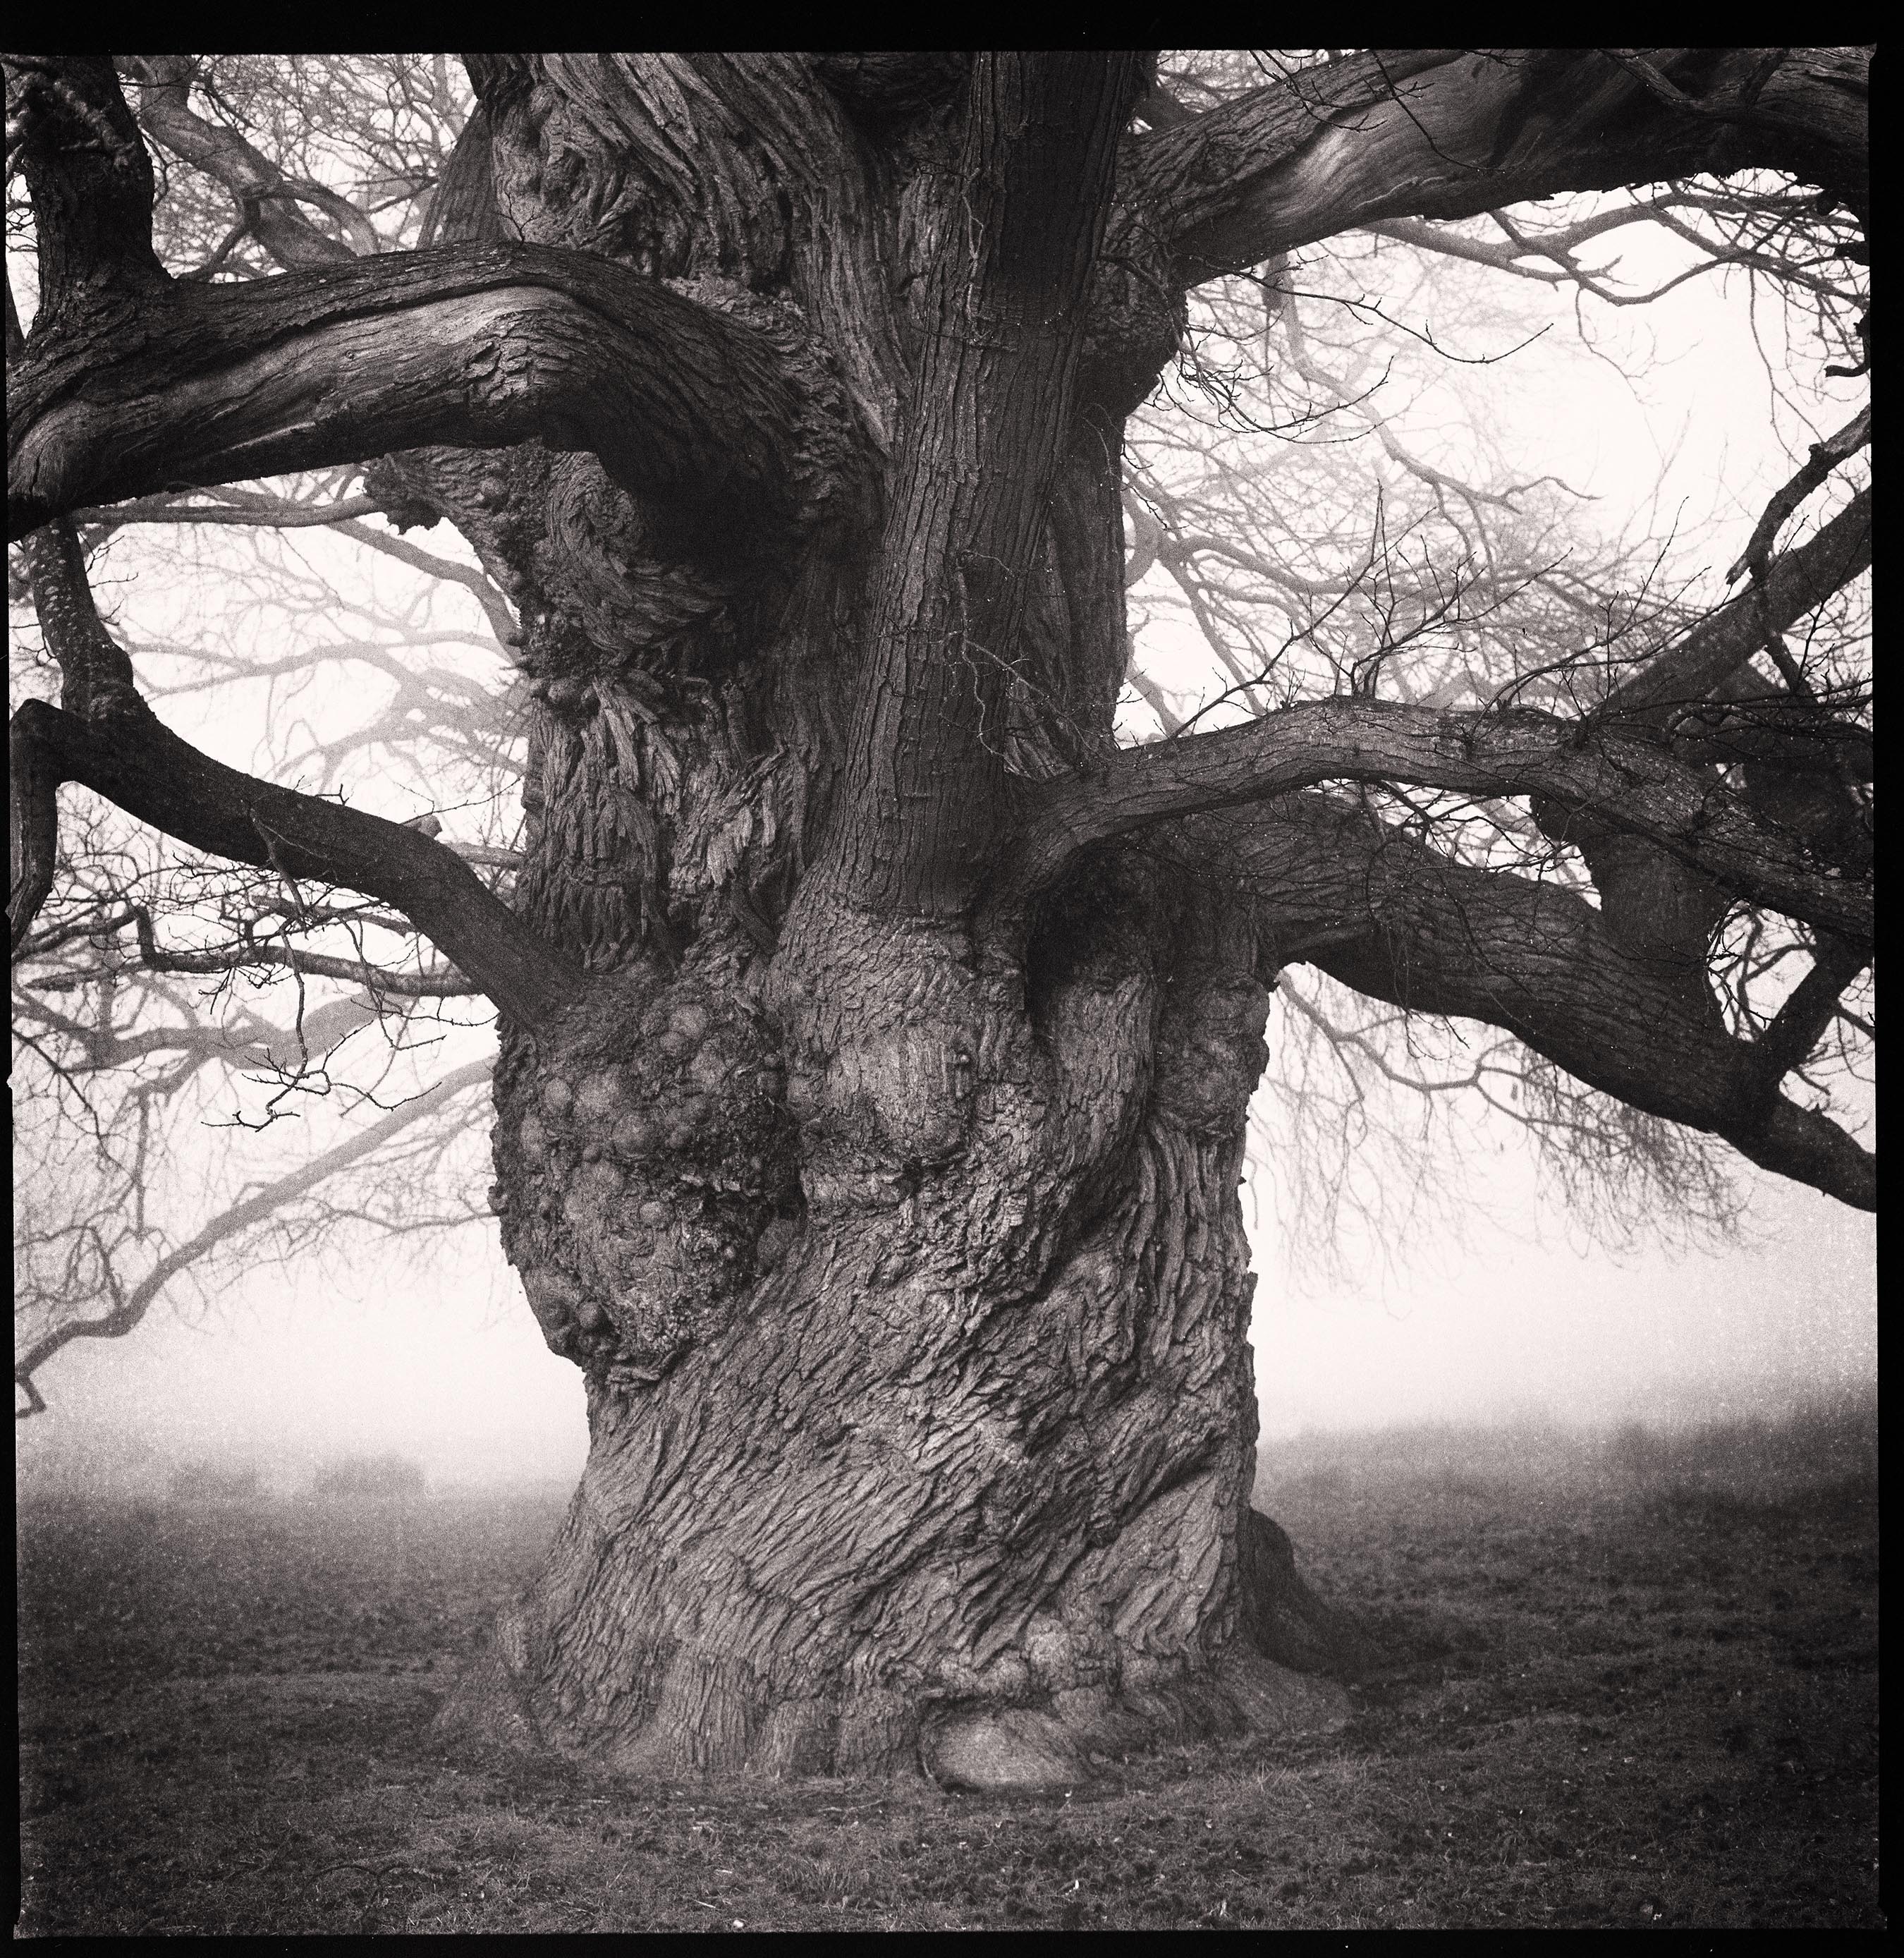 1.Petworth tree chesnut shot of medium format ILFORD FP4 black and white film by Jon Nicholson